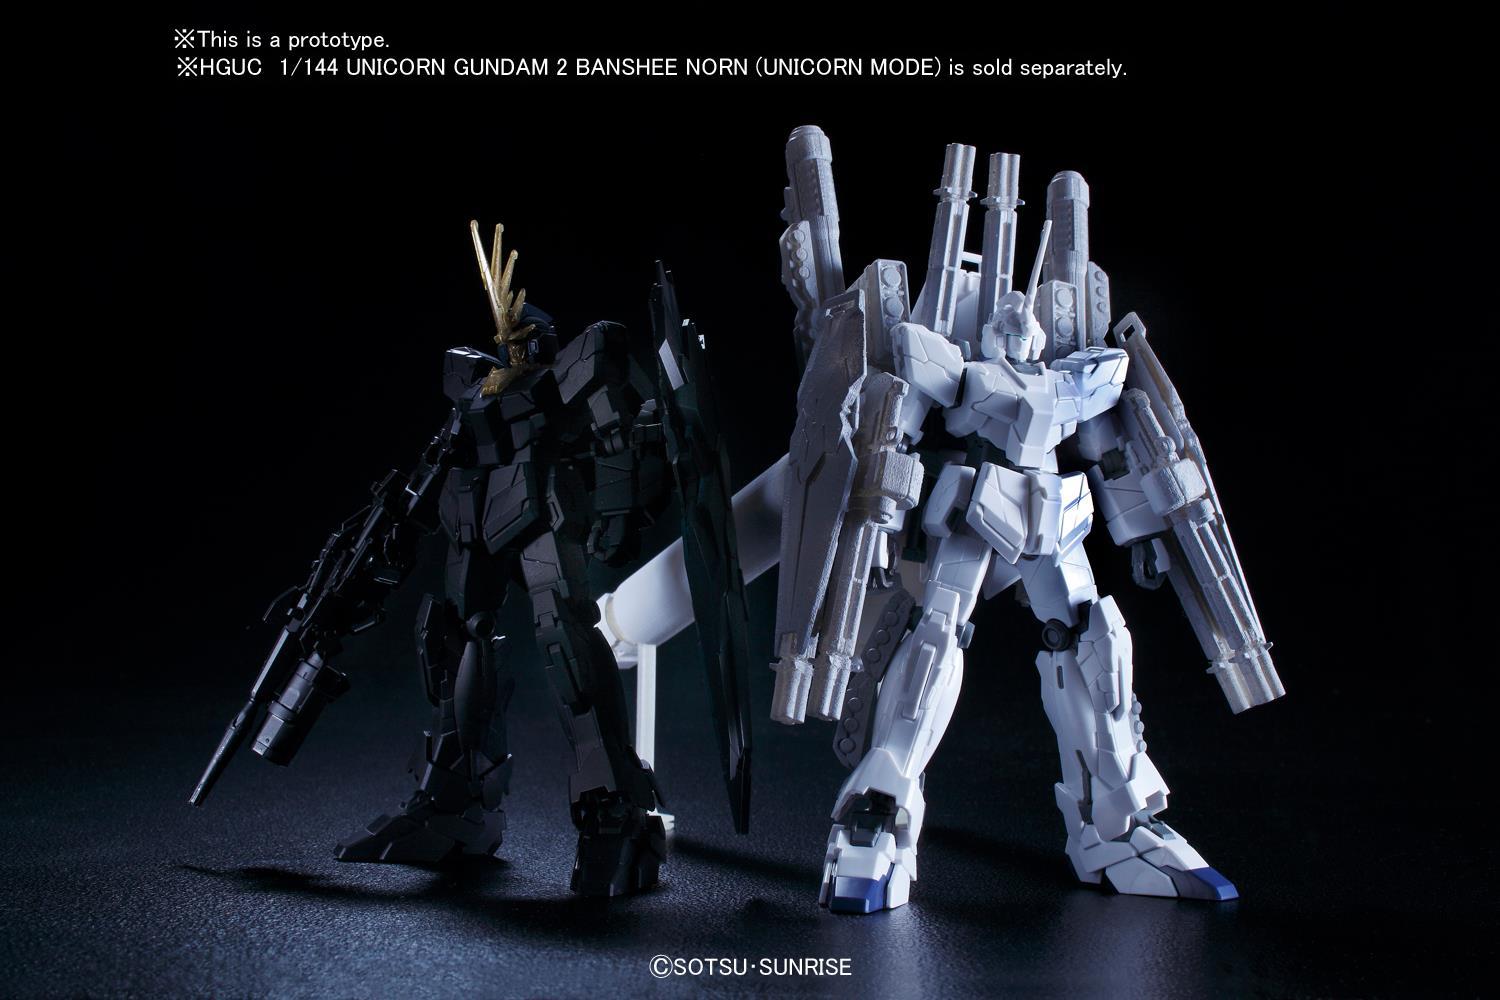 GUNDAM GUY: HGUC 1 144 Full Armor Unicorn Gundam Unicorn Mode